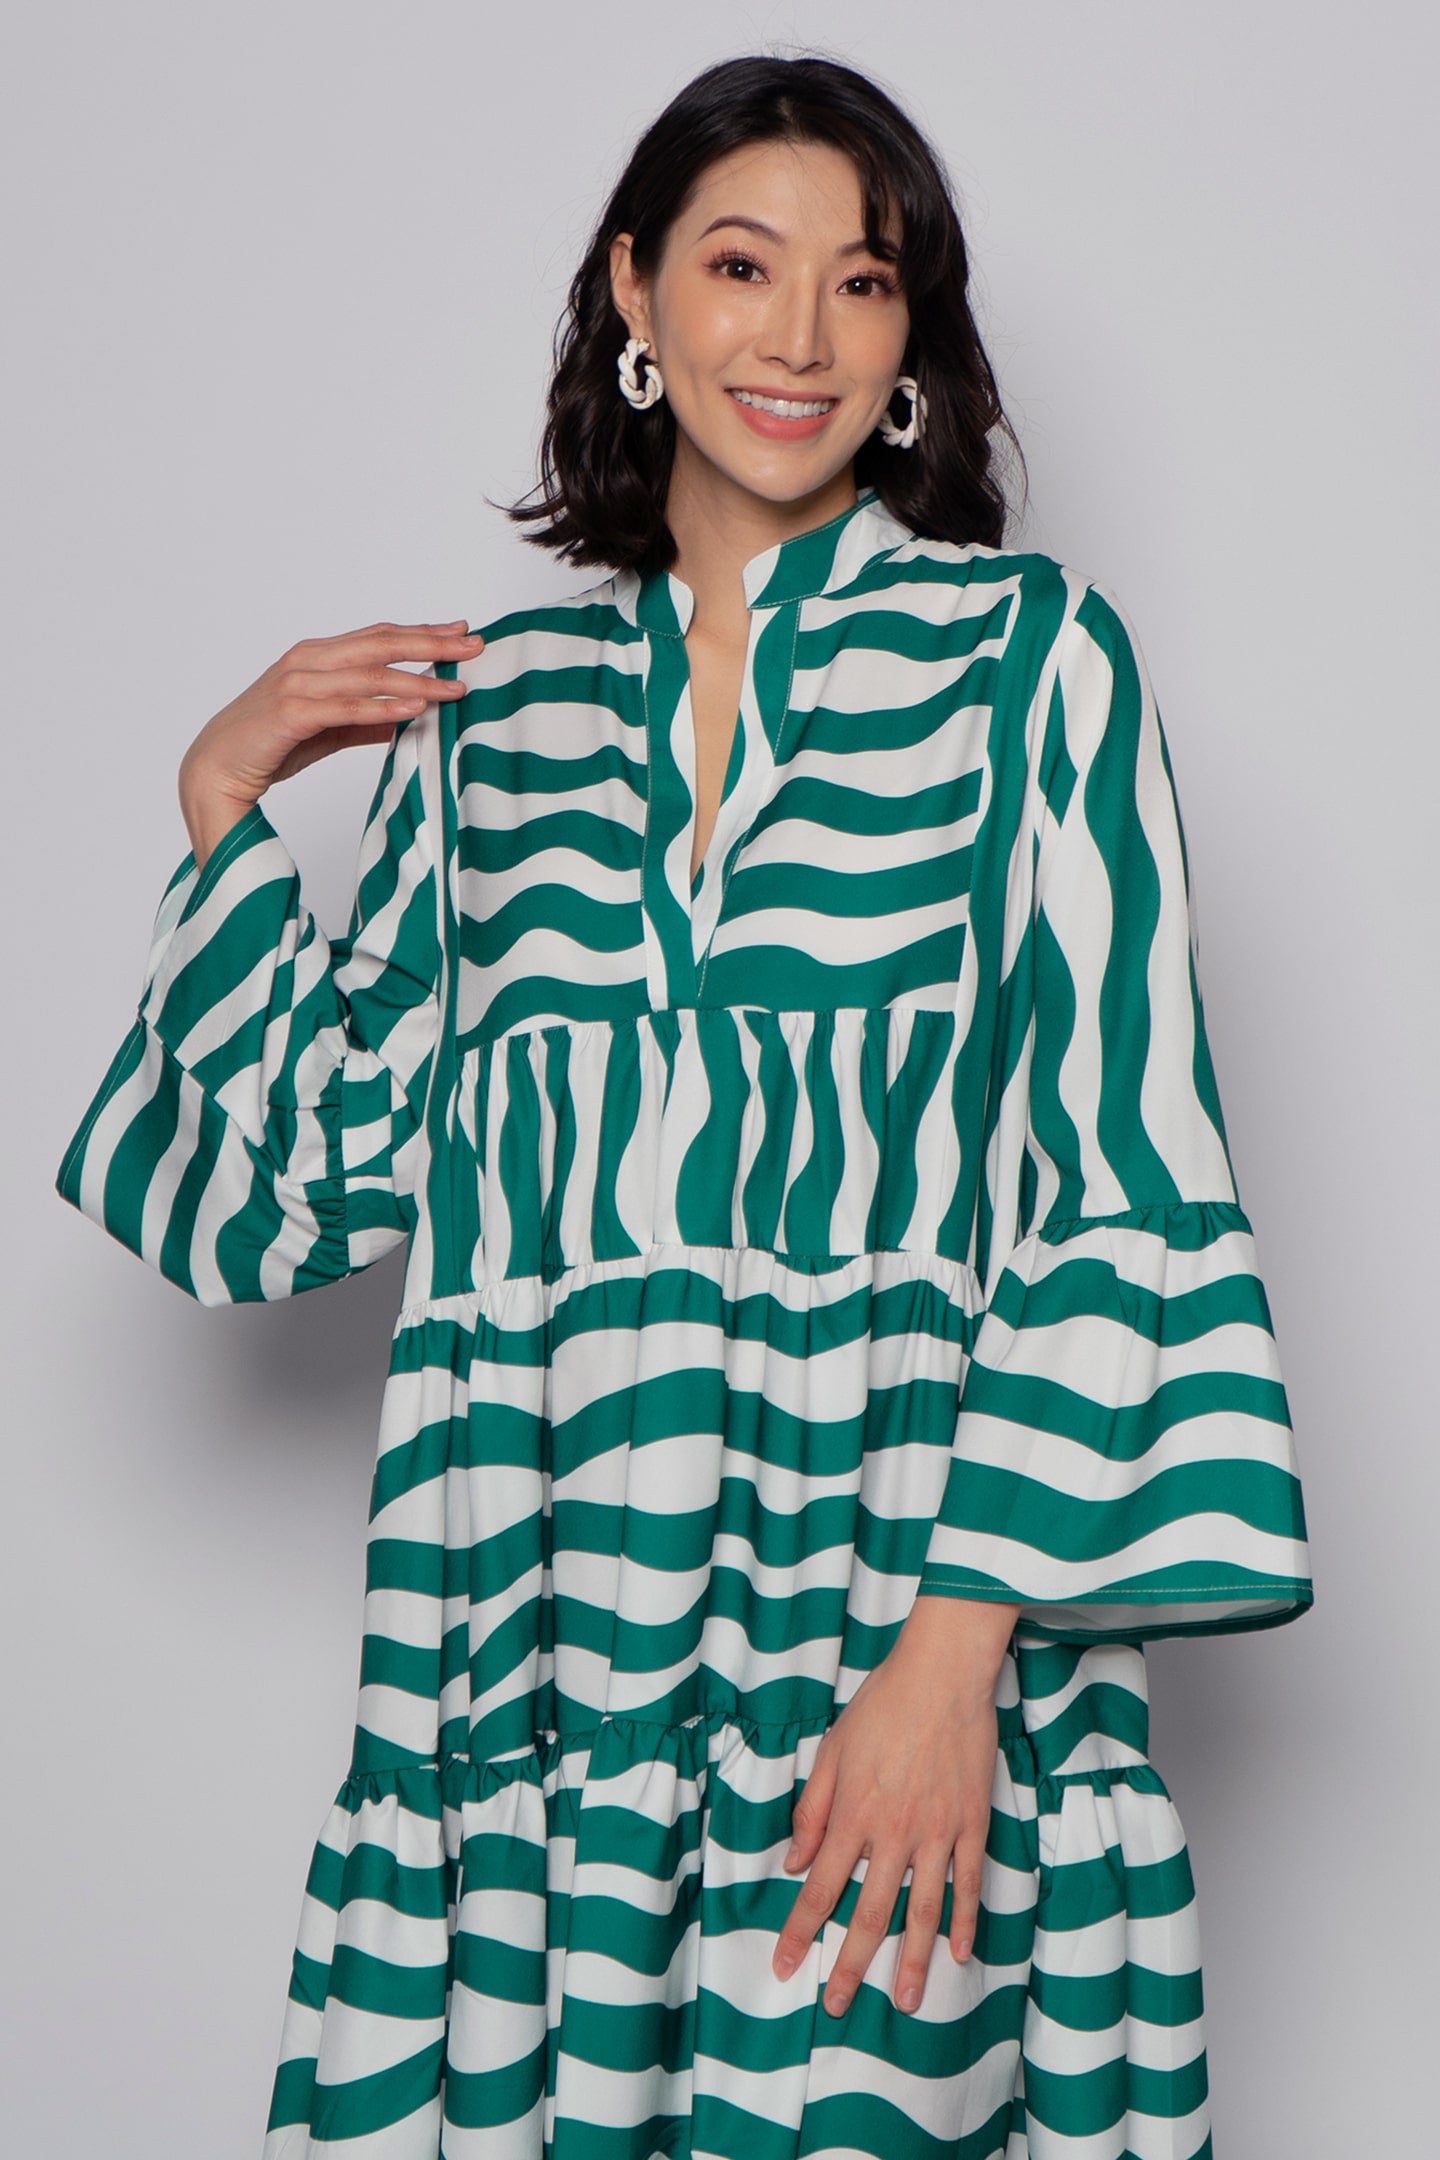 Romona Dress in Green Stripes